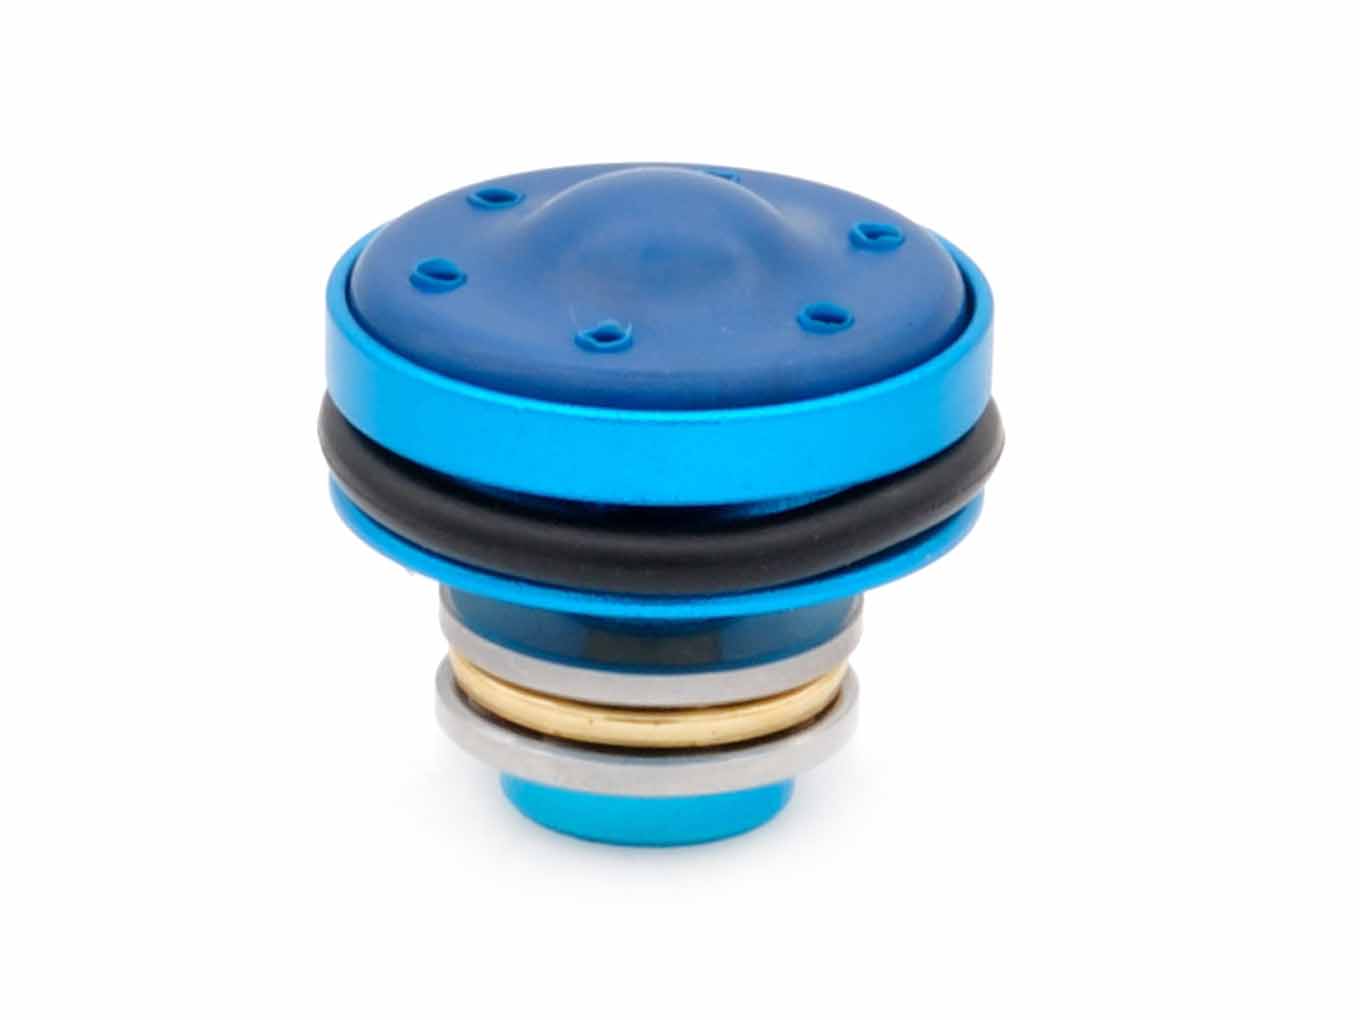 AOLS Piston Head with ball bearing Mushroom Type - Blue